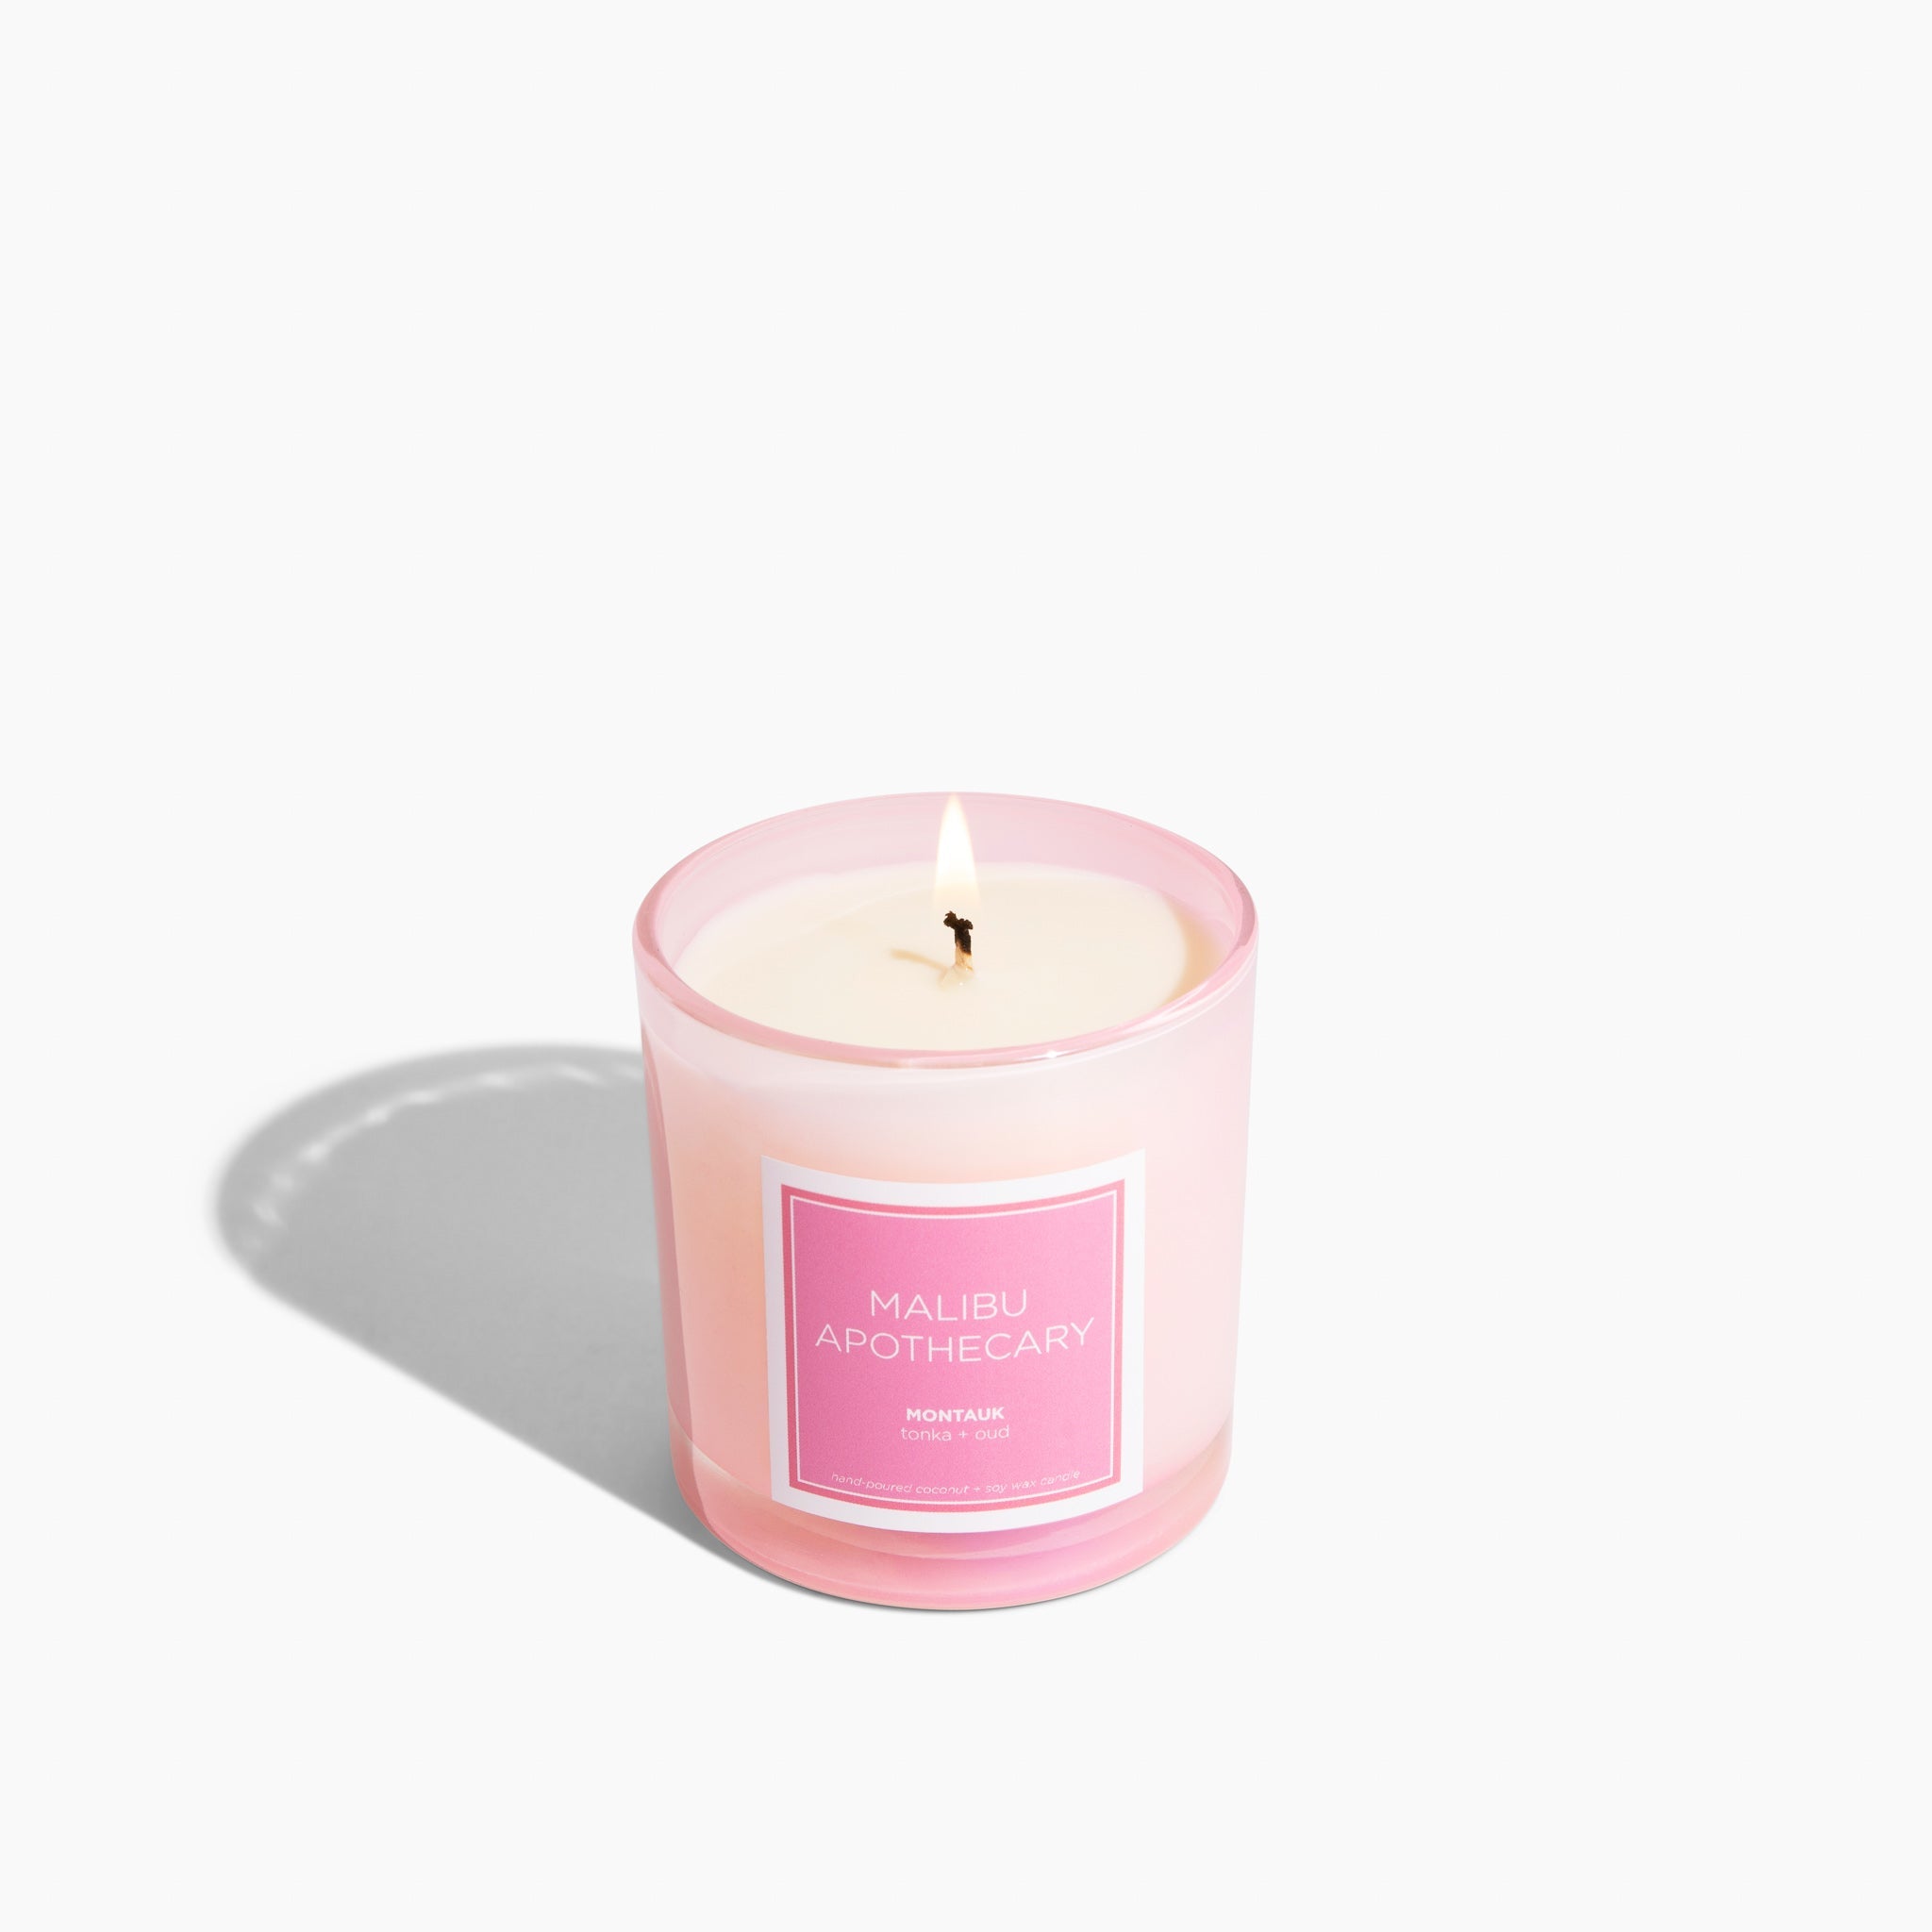 Iridescent Pink Candle by Malibu Apothecary